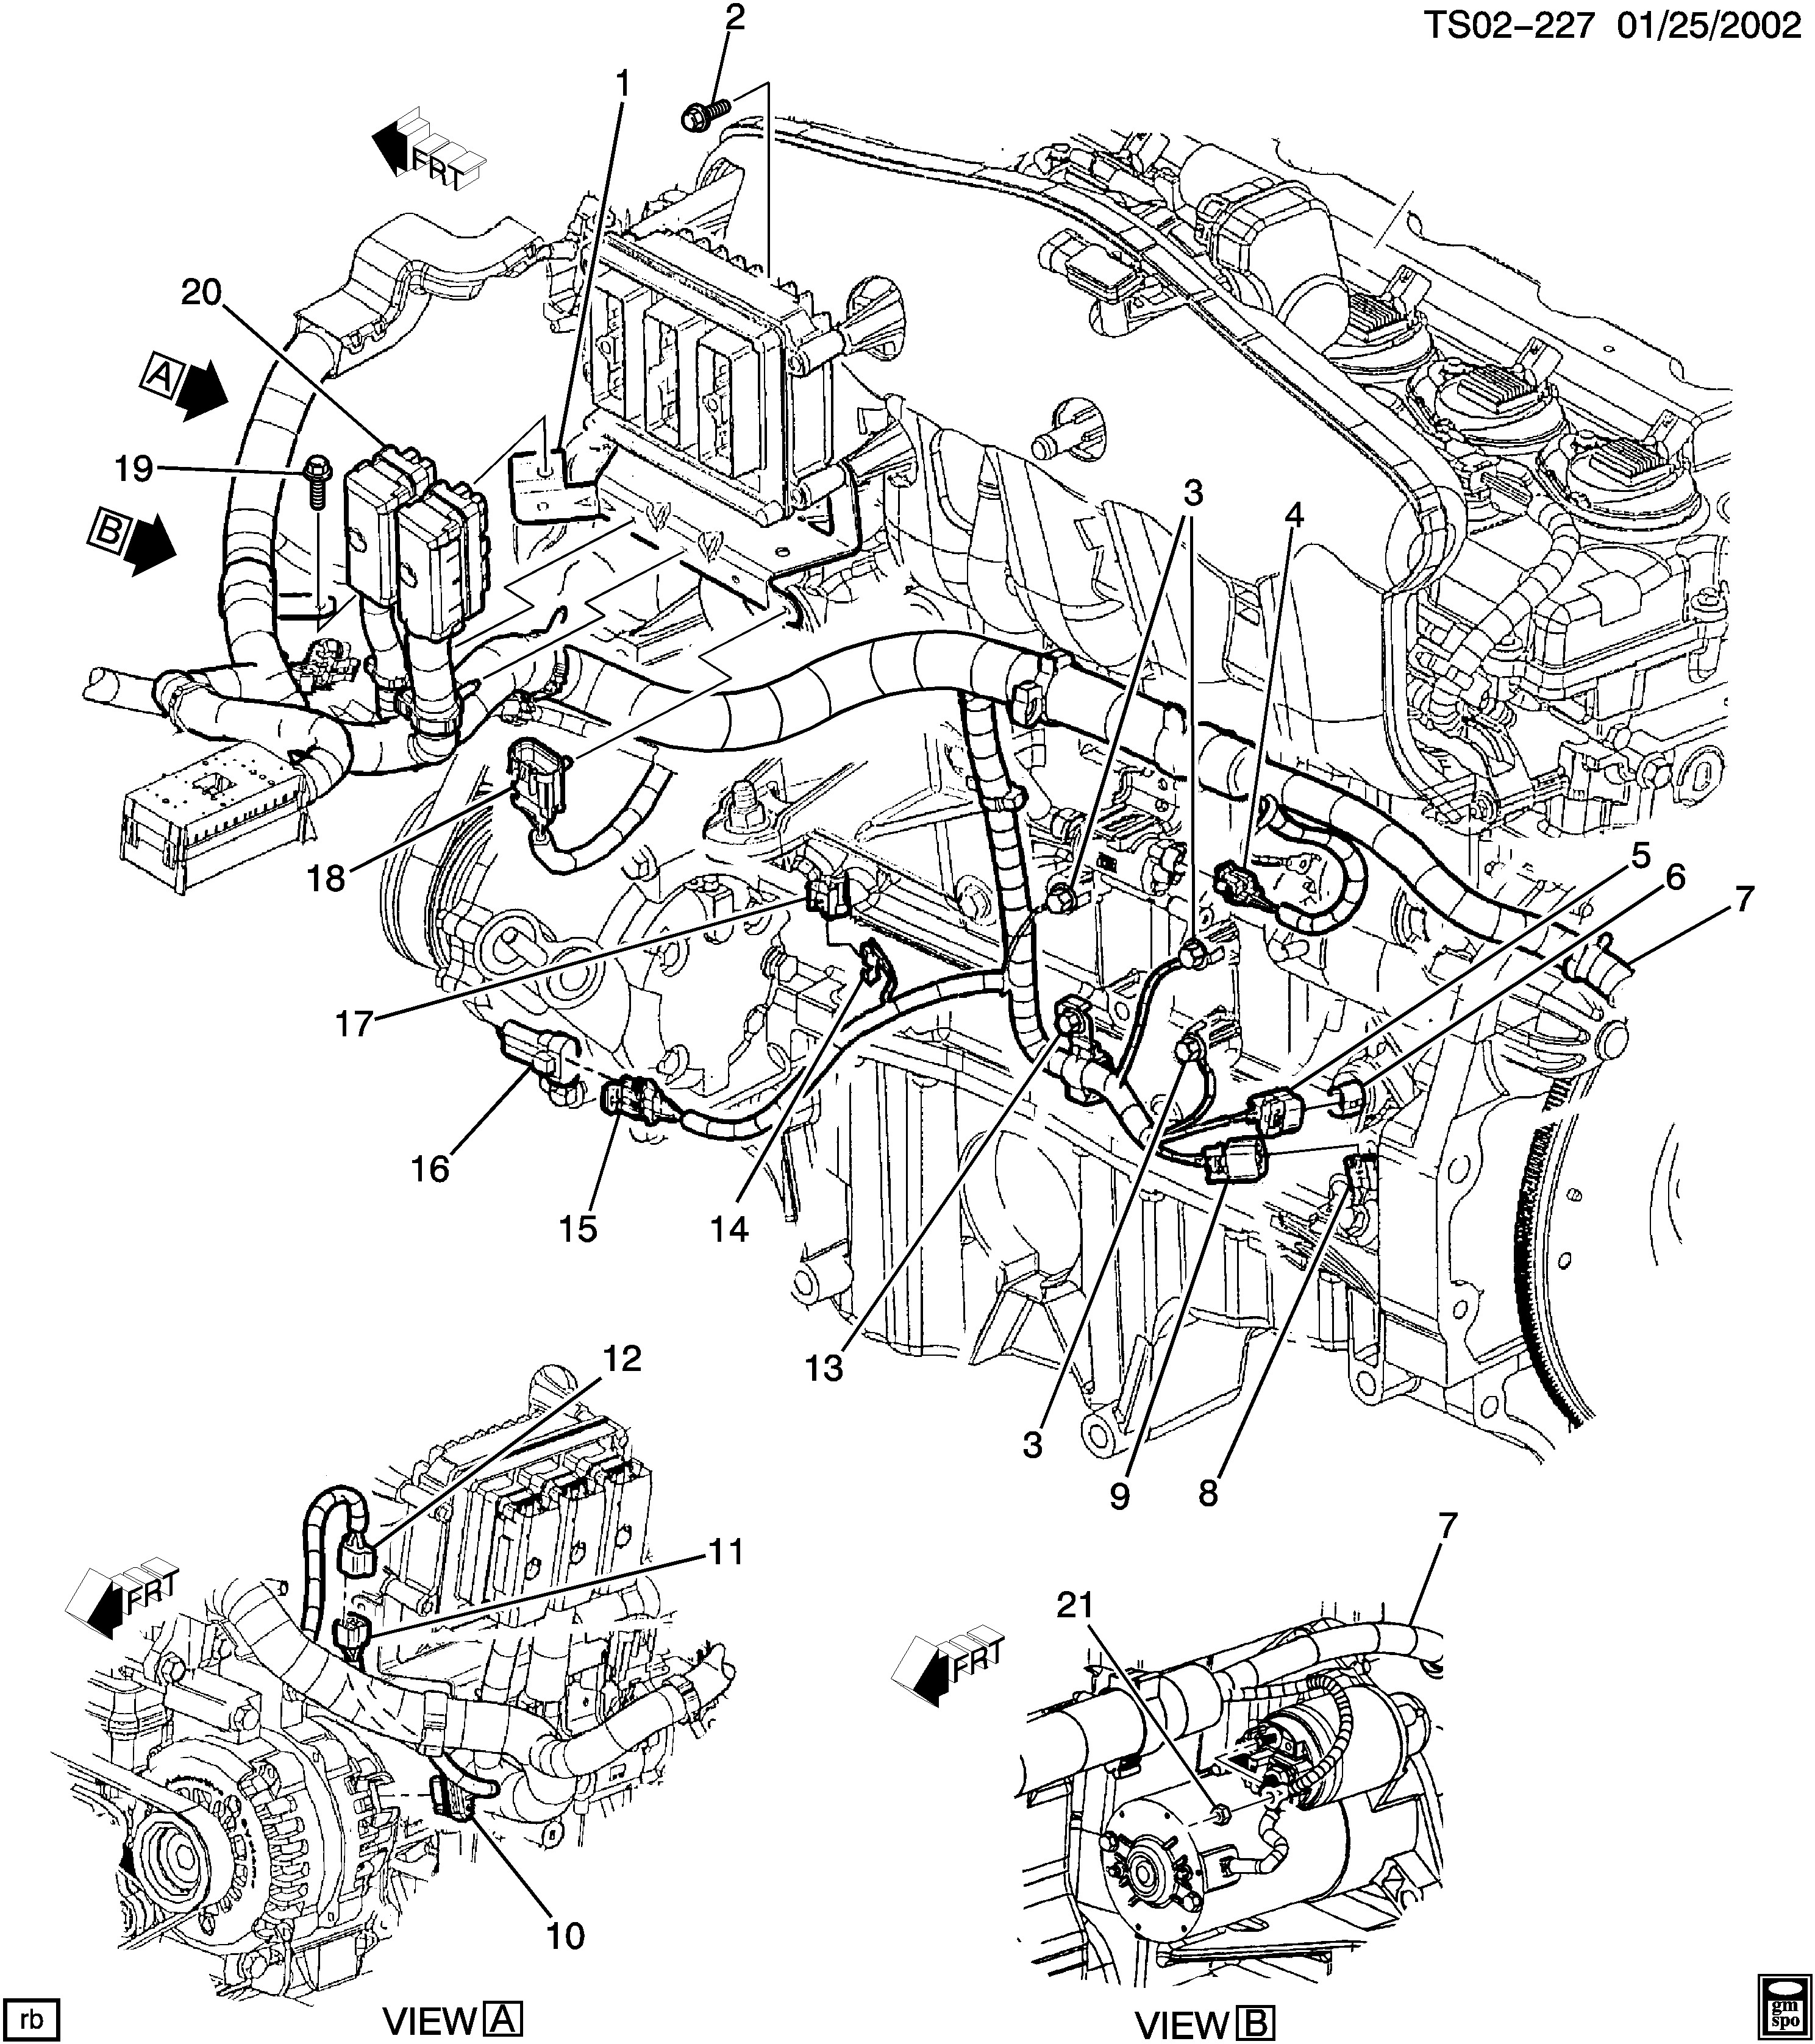 2004 Chevy Trailblazer Engine Diagram 02 Chevy Trailblazer Engine Wiring Harness Simple Guide Of 2004 Chevy Trailblazer Engine Diagram